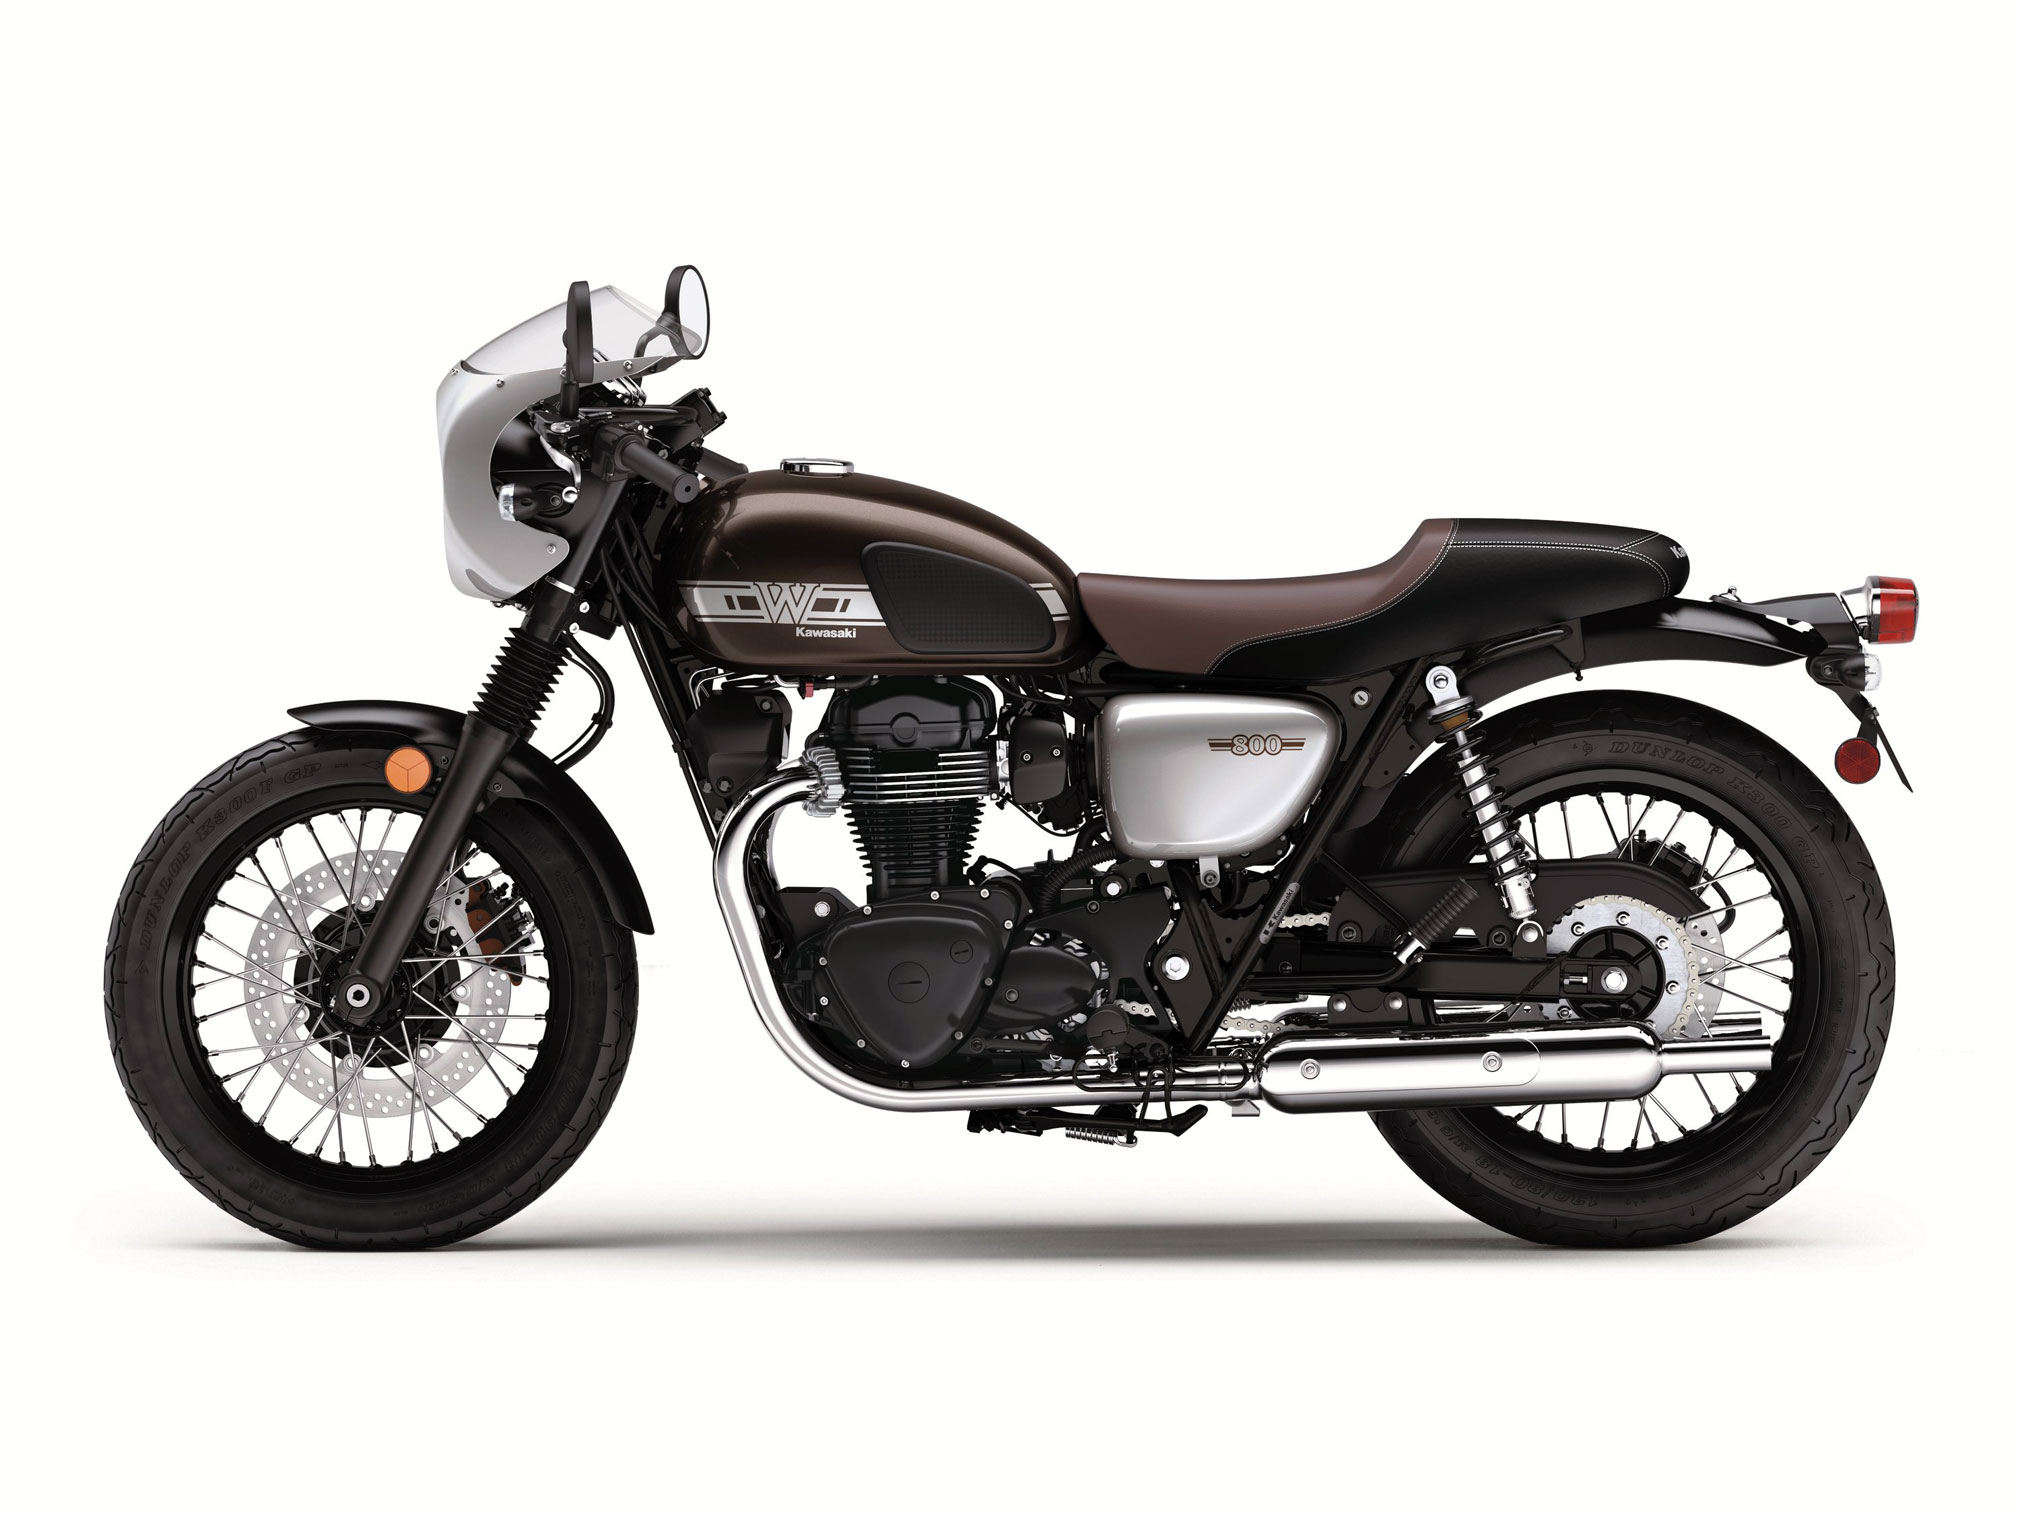 2020 Kawasaki W800 Cafe • Total Motorcycle